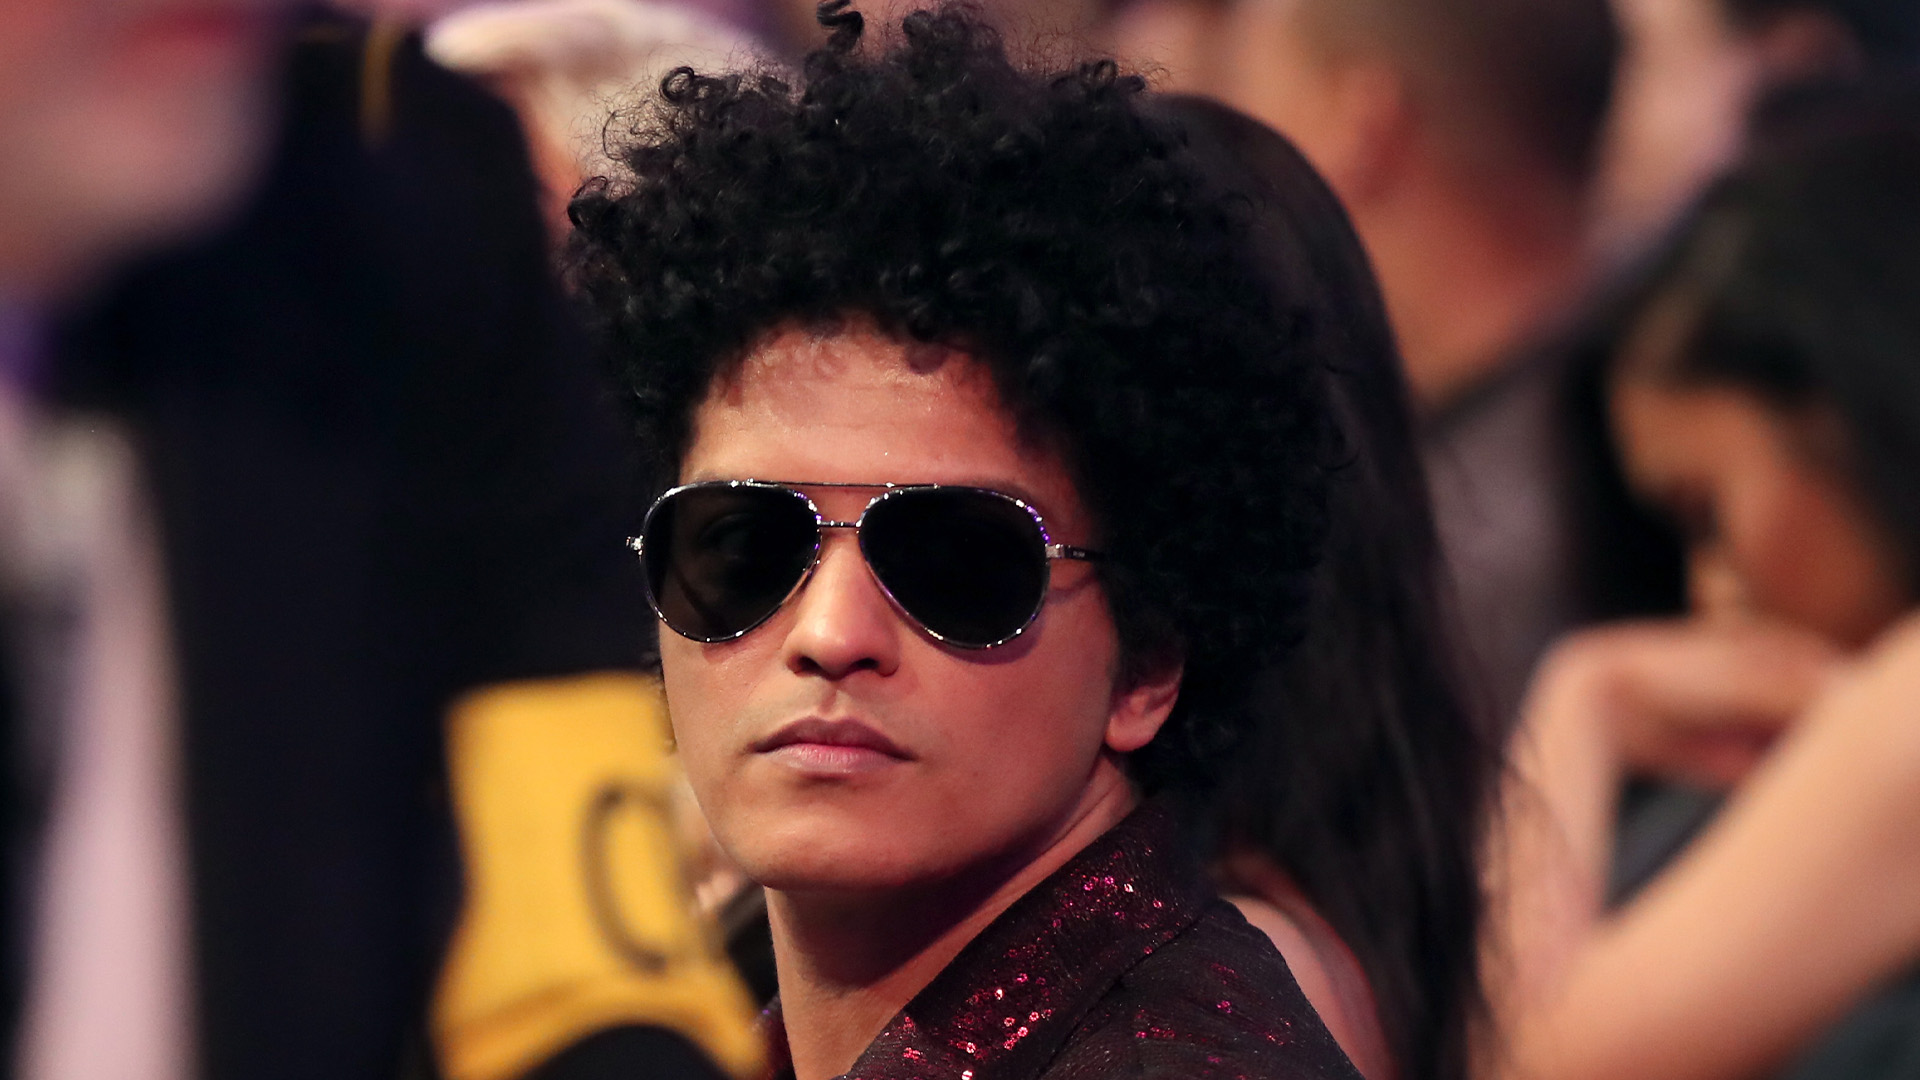 Bruno Mars has allegedly ‘racked up $50M gambling debt’ at MGM casino during nine-year Las Vegas residency